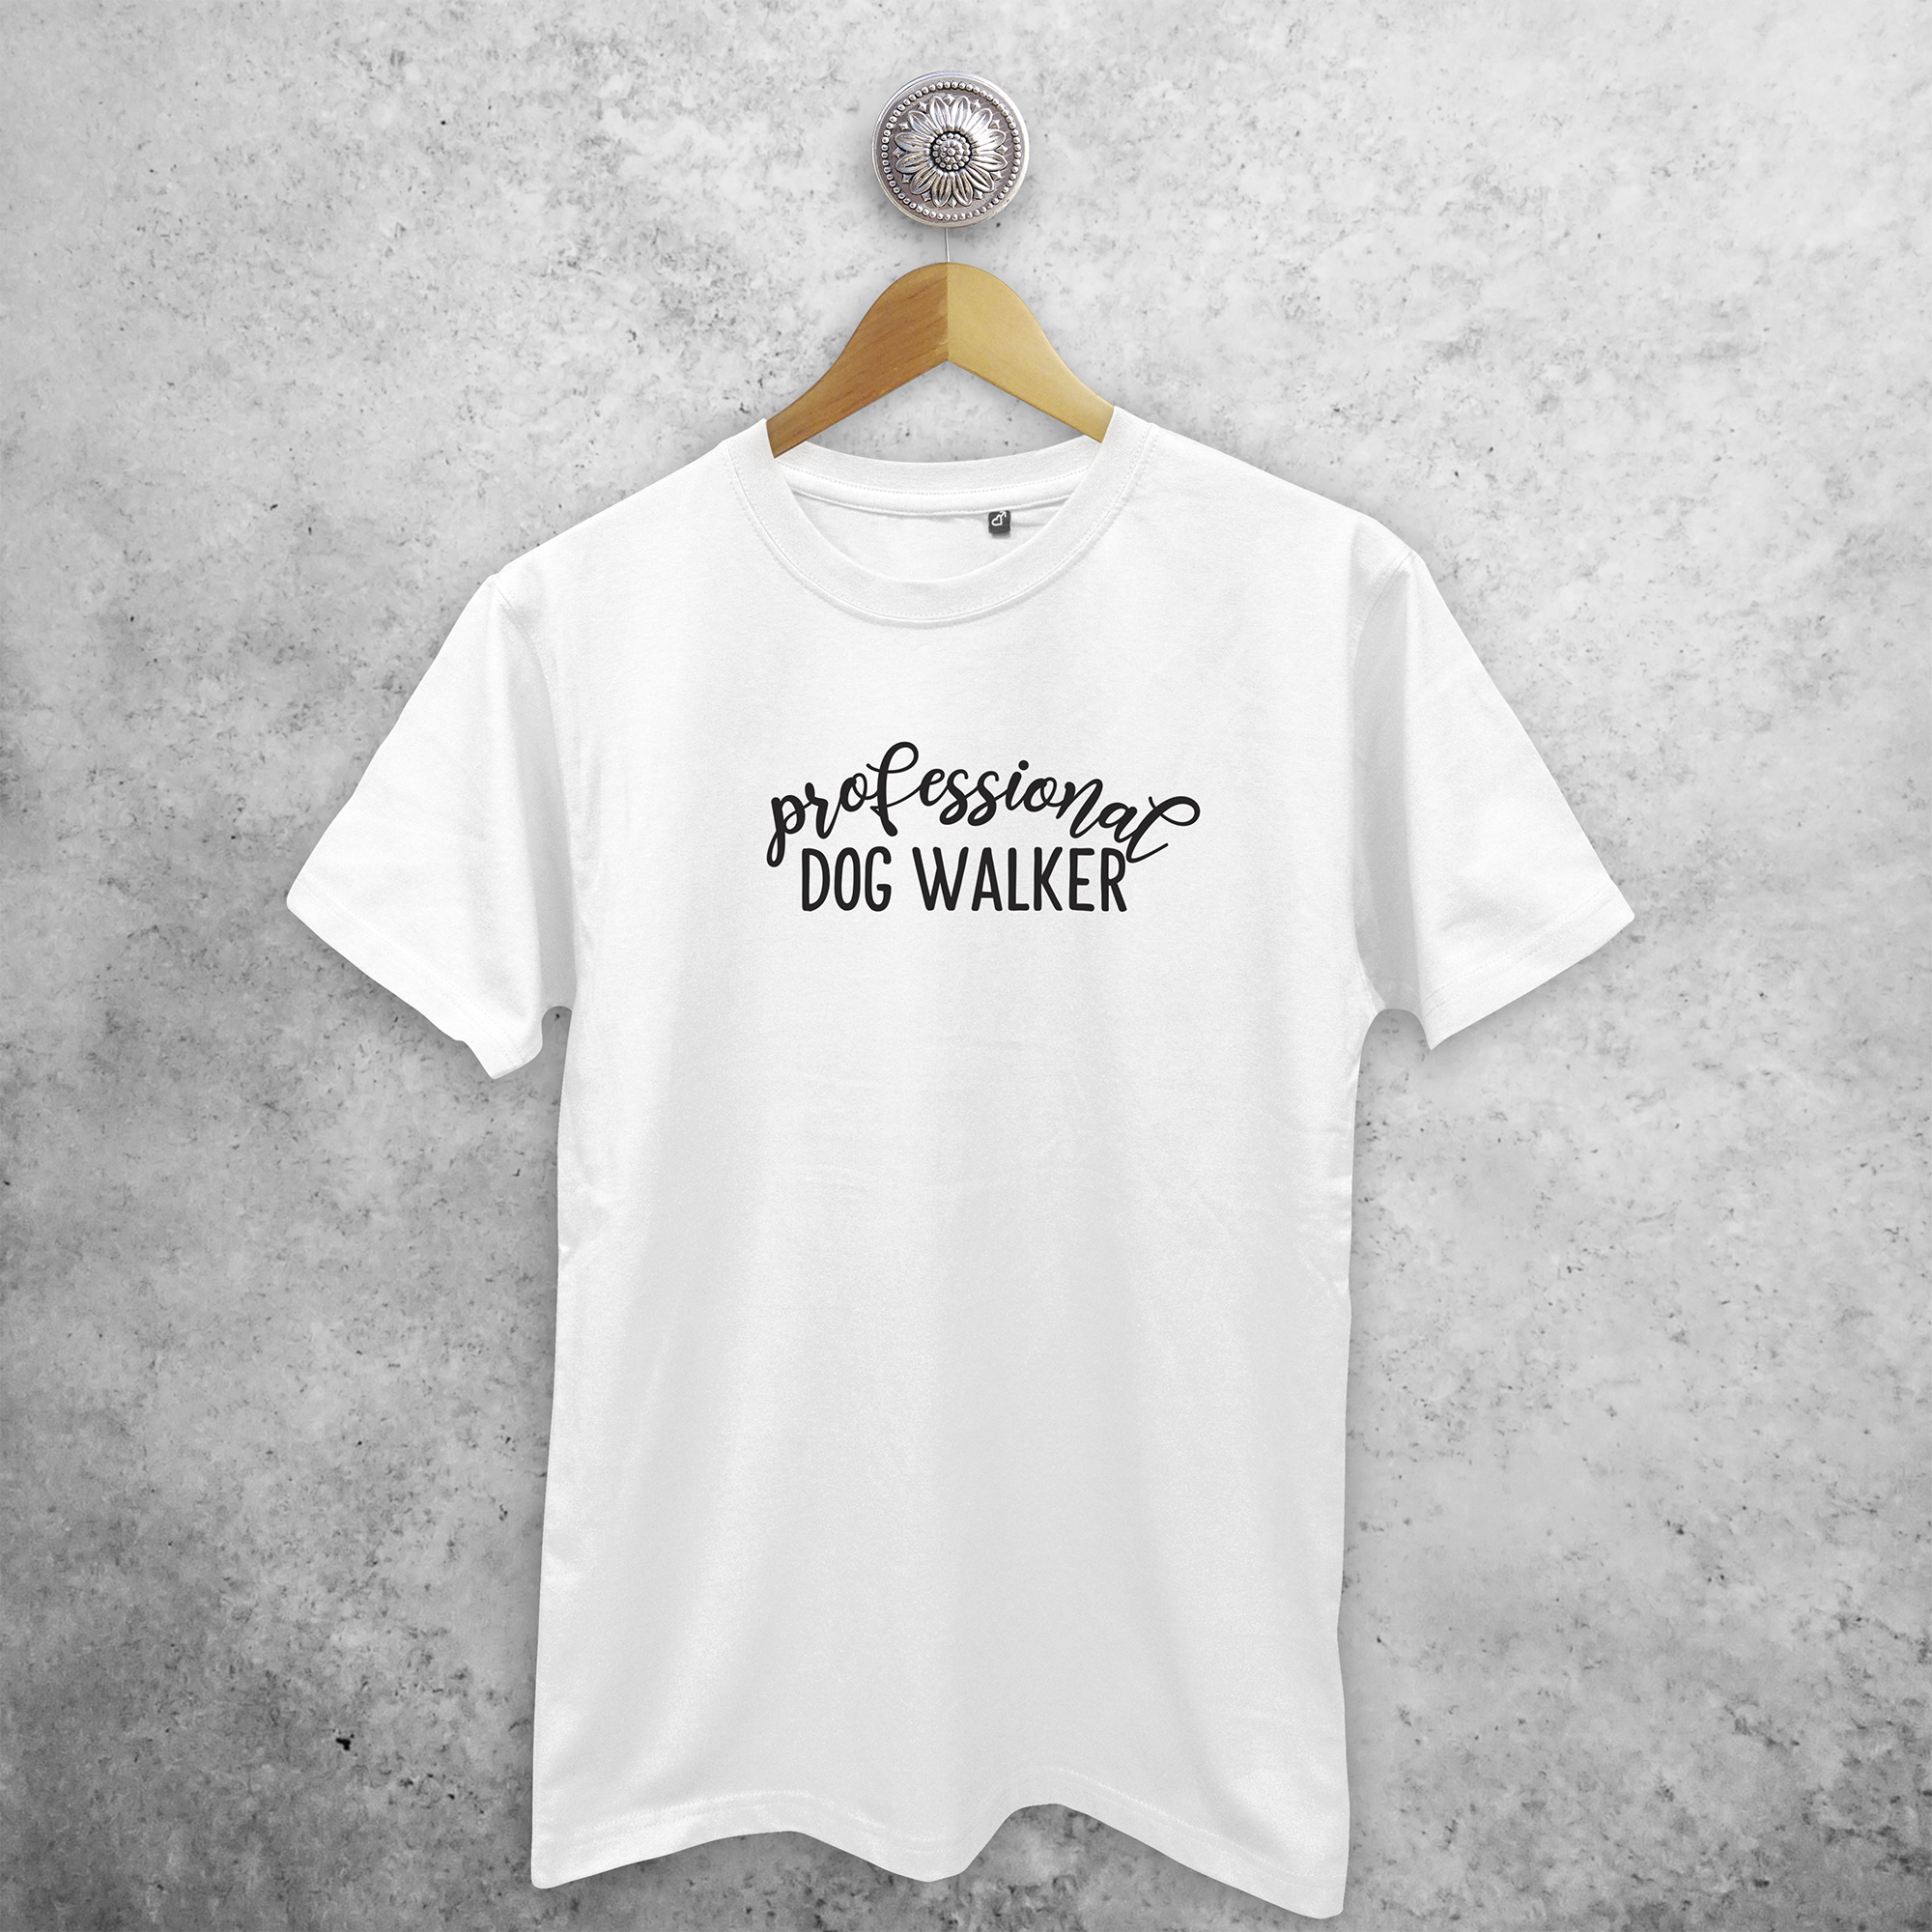 'Professional dog walker' volwassene shirt